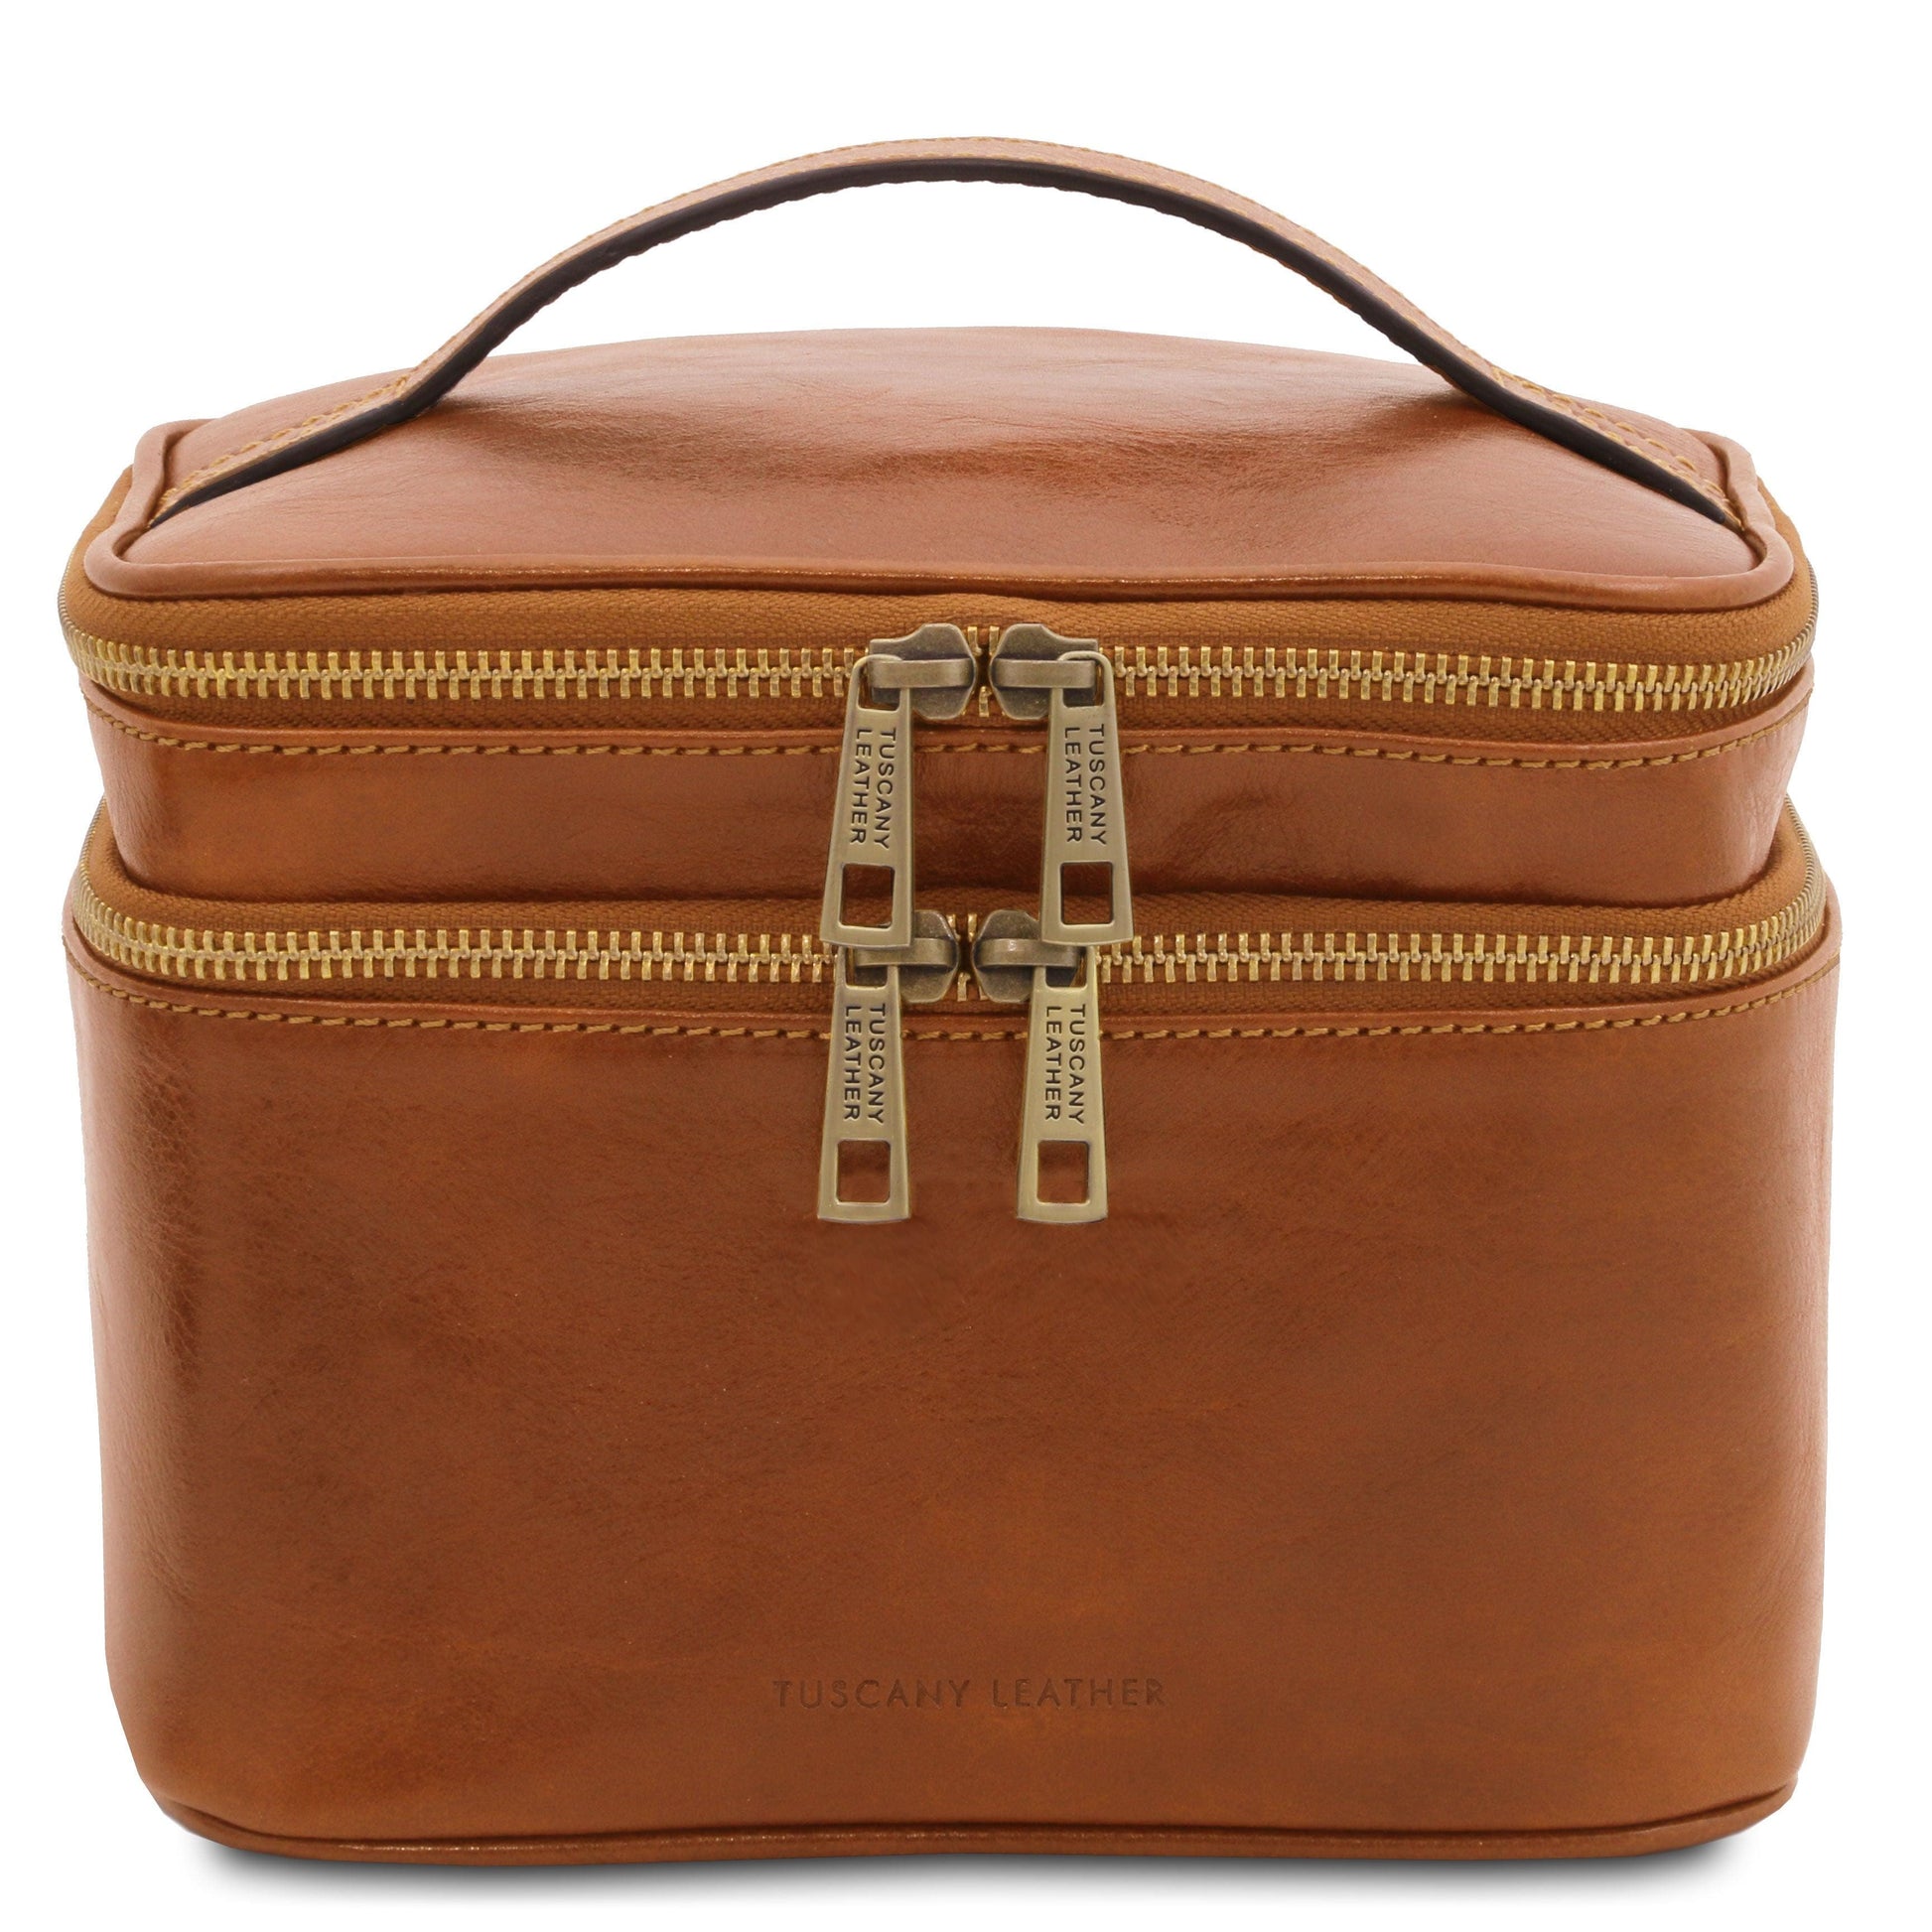 Eliot - Leather toiletry bag train case | TL142045 - Premium Travel leather accessories - Shop now at San Rocco Italia